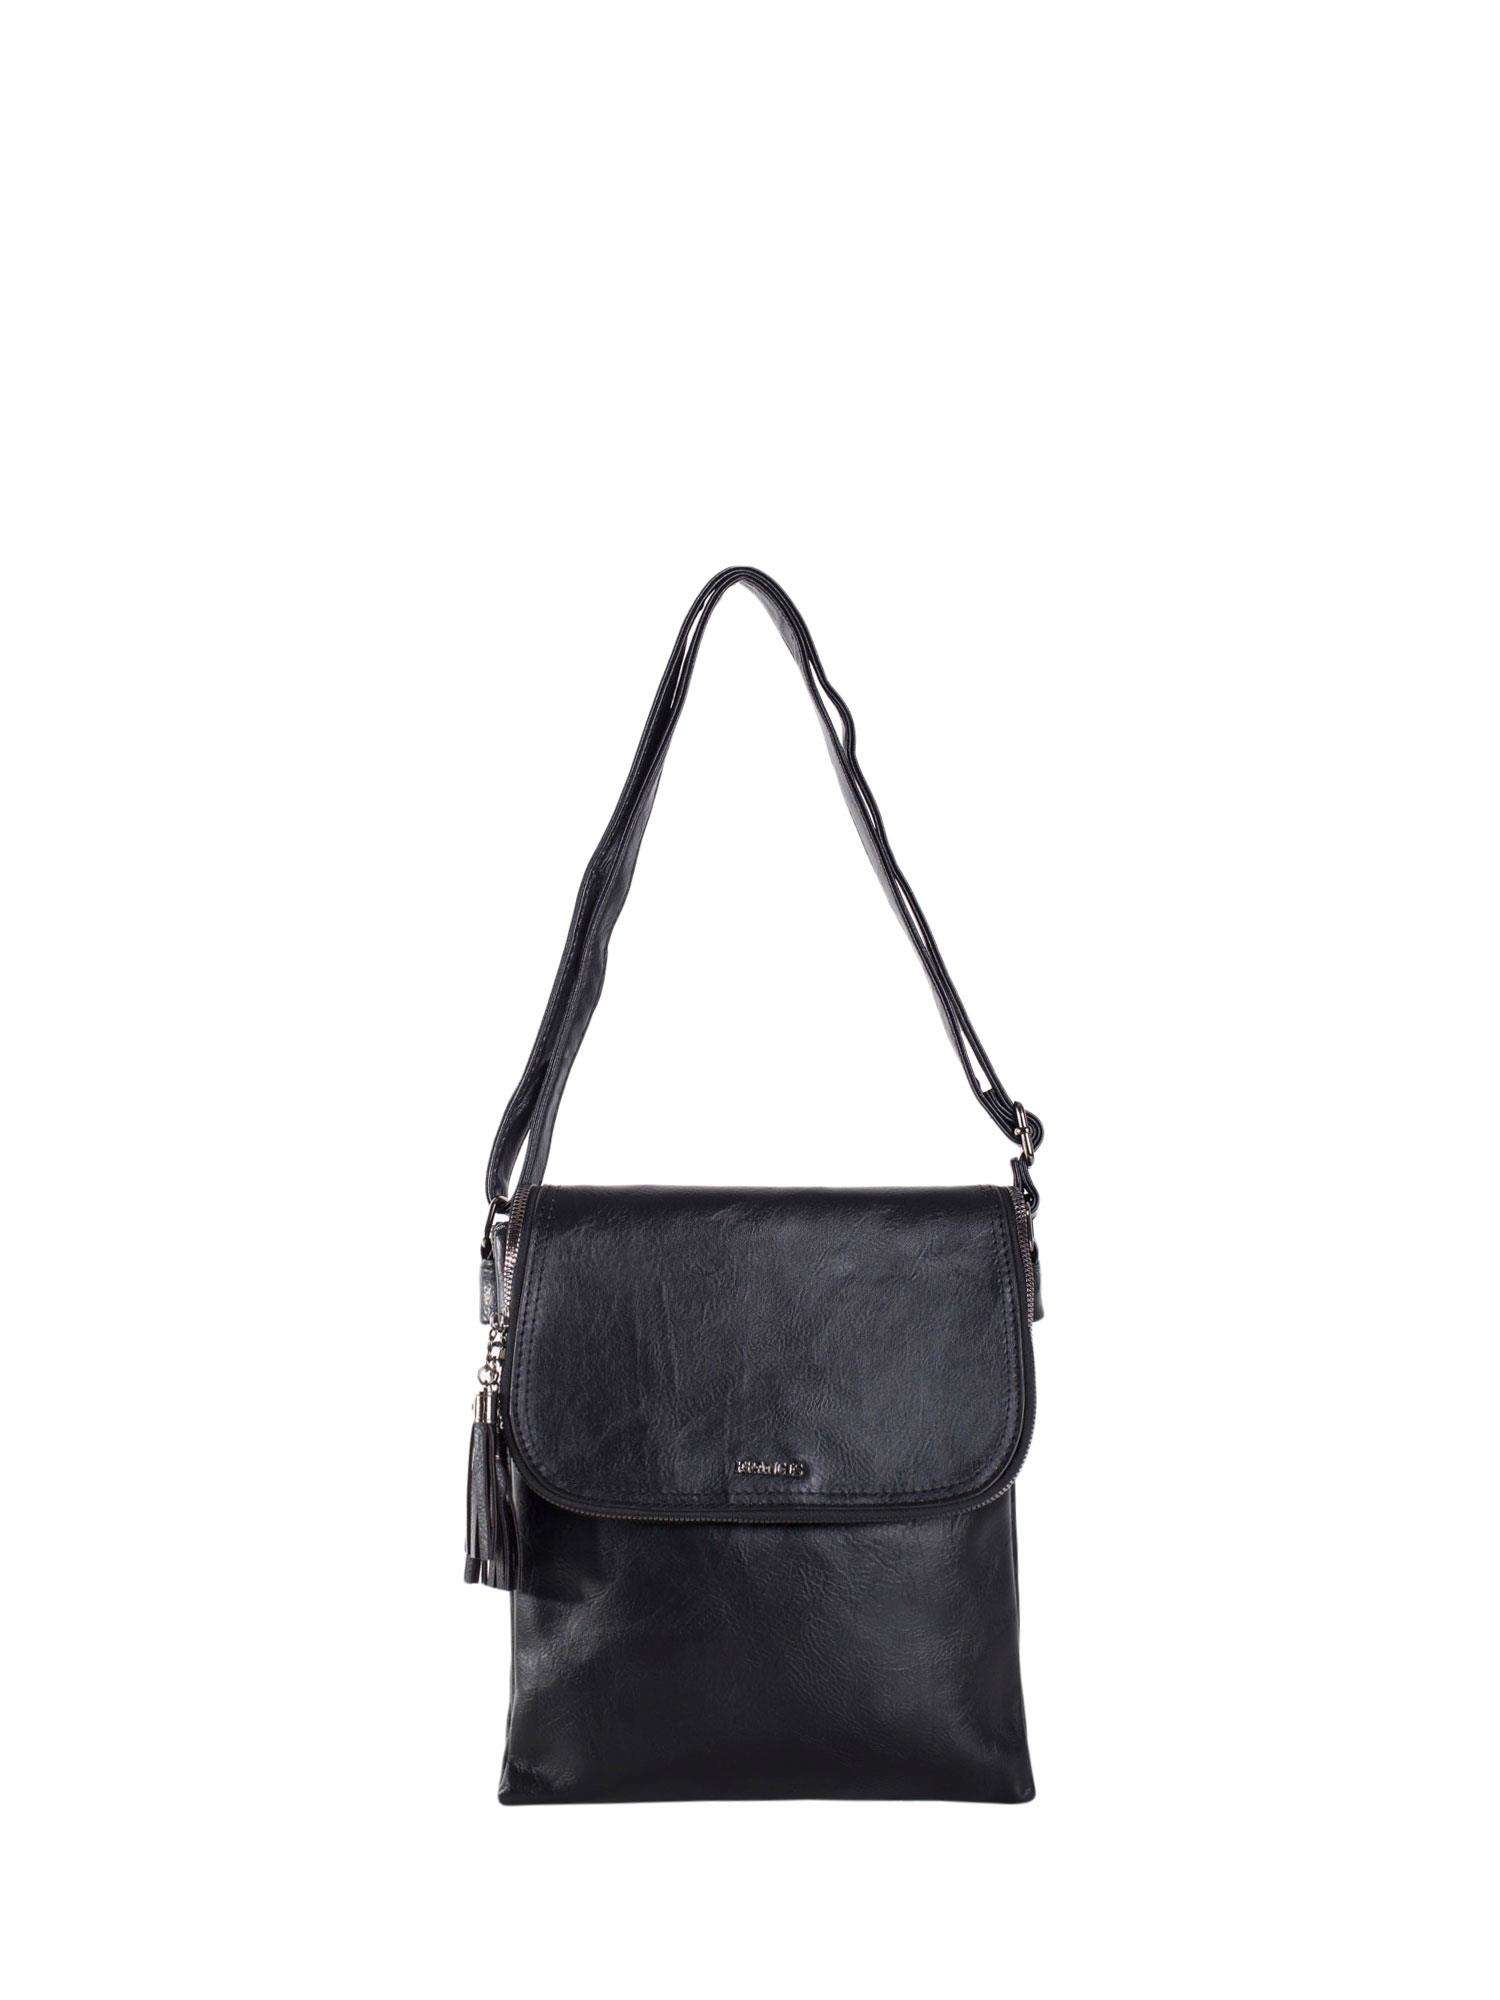 Black rectangular messenger bag made of eco-leather